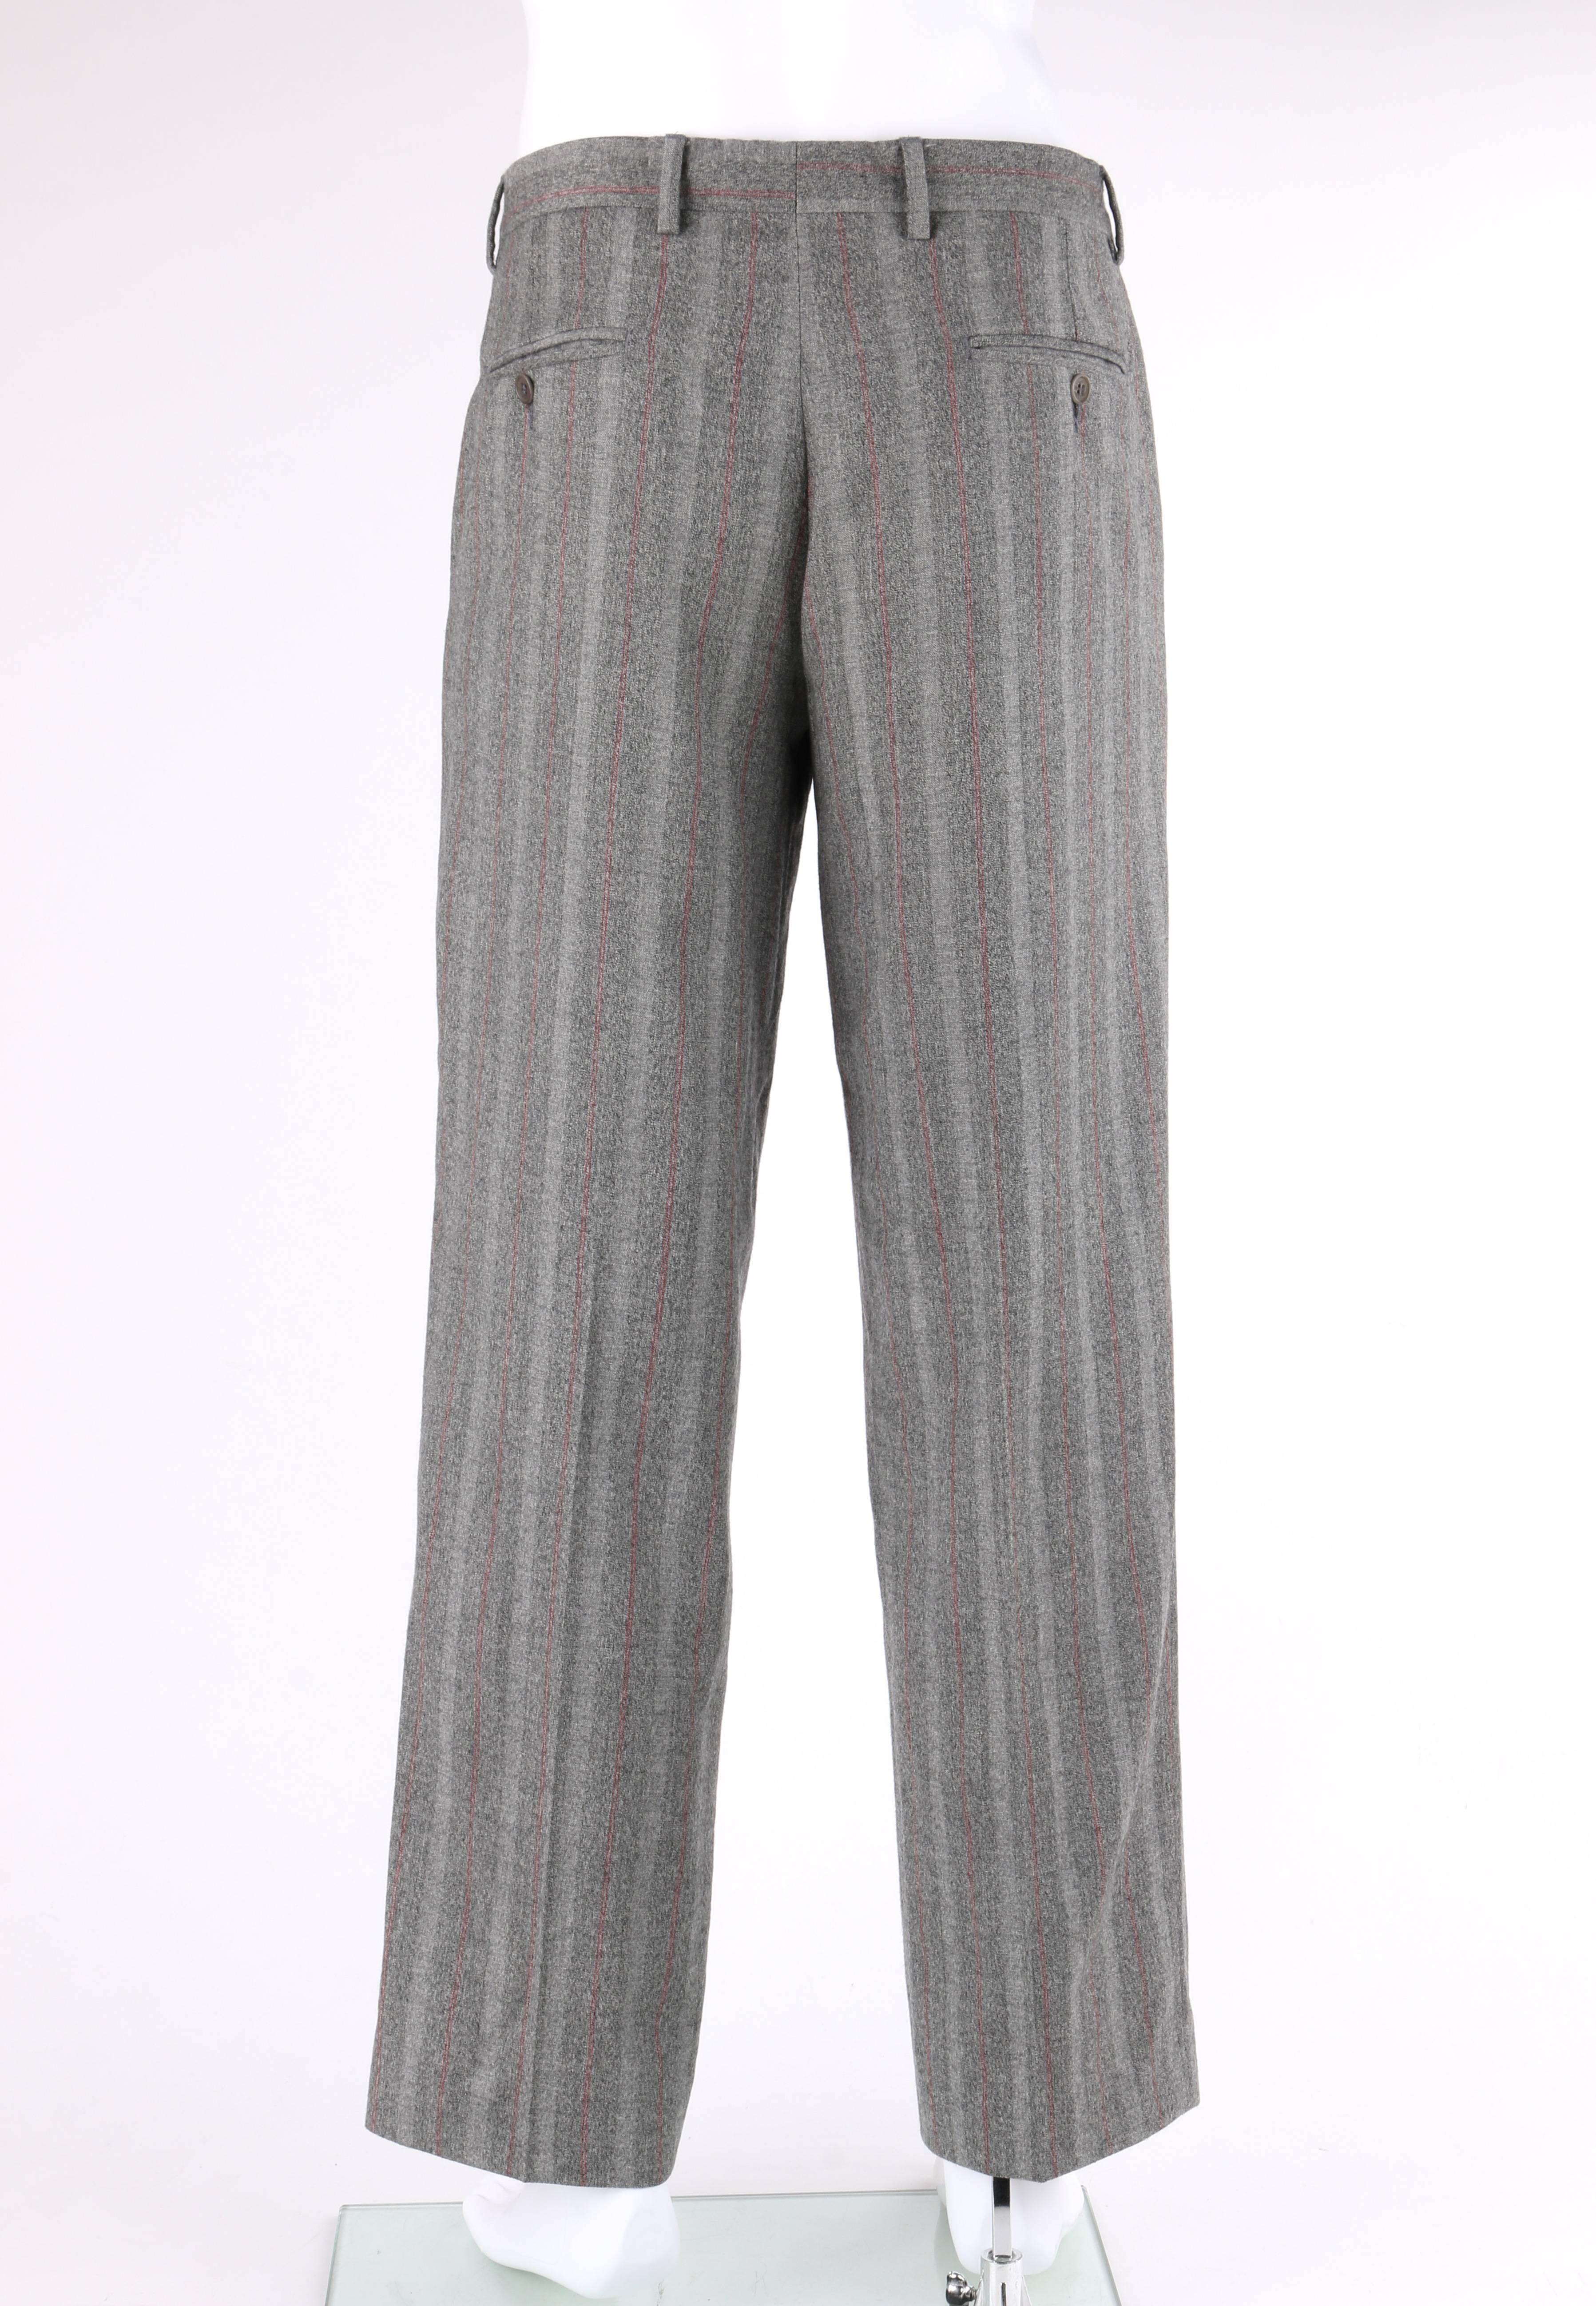 ALEXANDER McQUEEN c.2001 2 Pc Gray & Red Pinstripe Wool Jacket Pant Suit Set 1